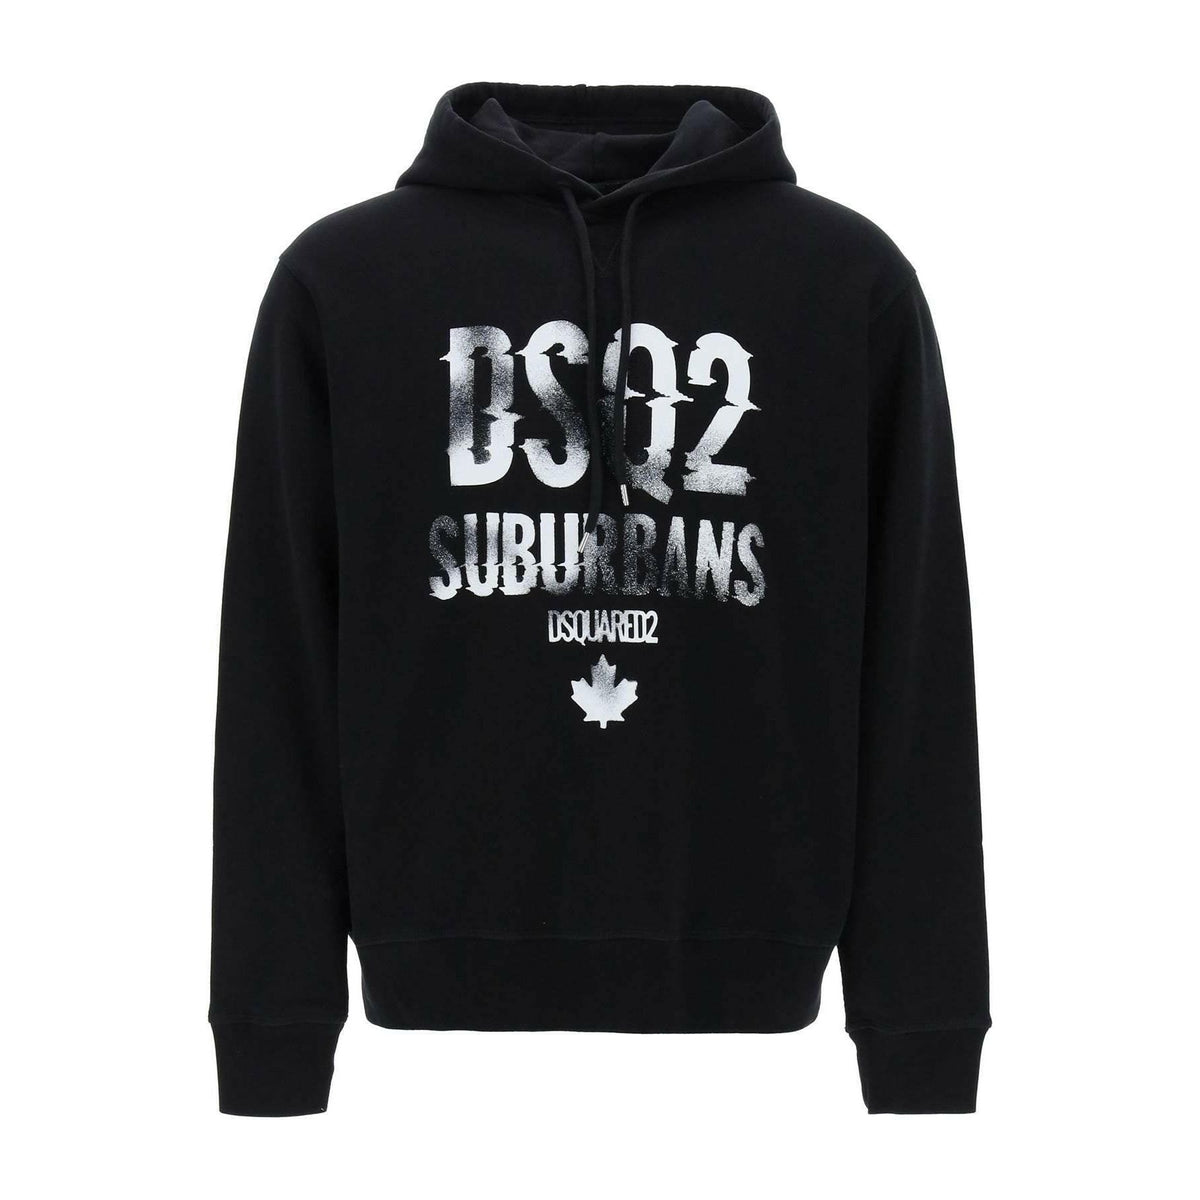 Black Cool Fit Sweatshirt With Suburbans Logo Print DSQUARED2 JOHN JULIA.